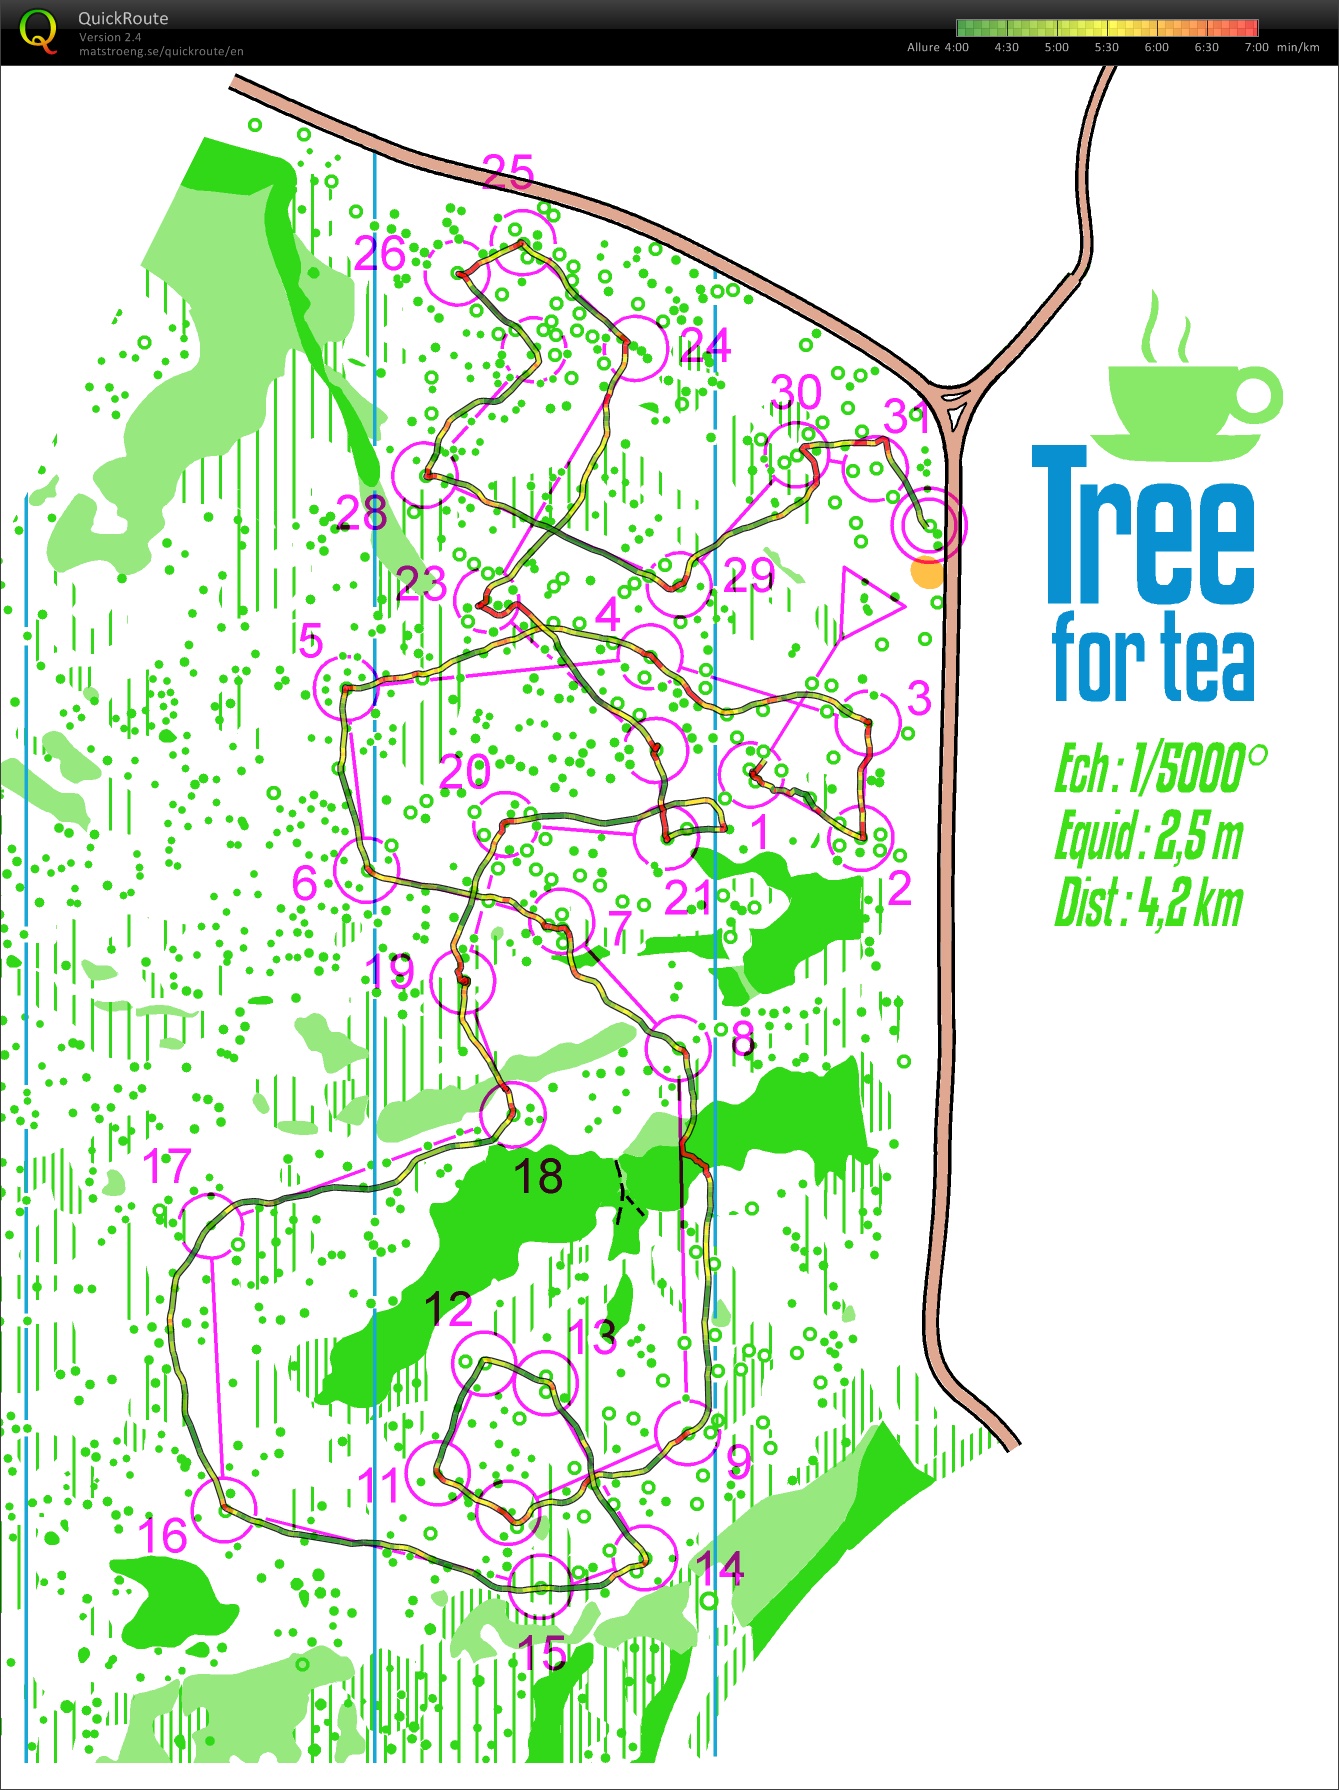 Tree for tea (16.01.2016)